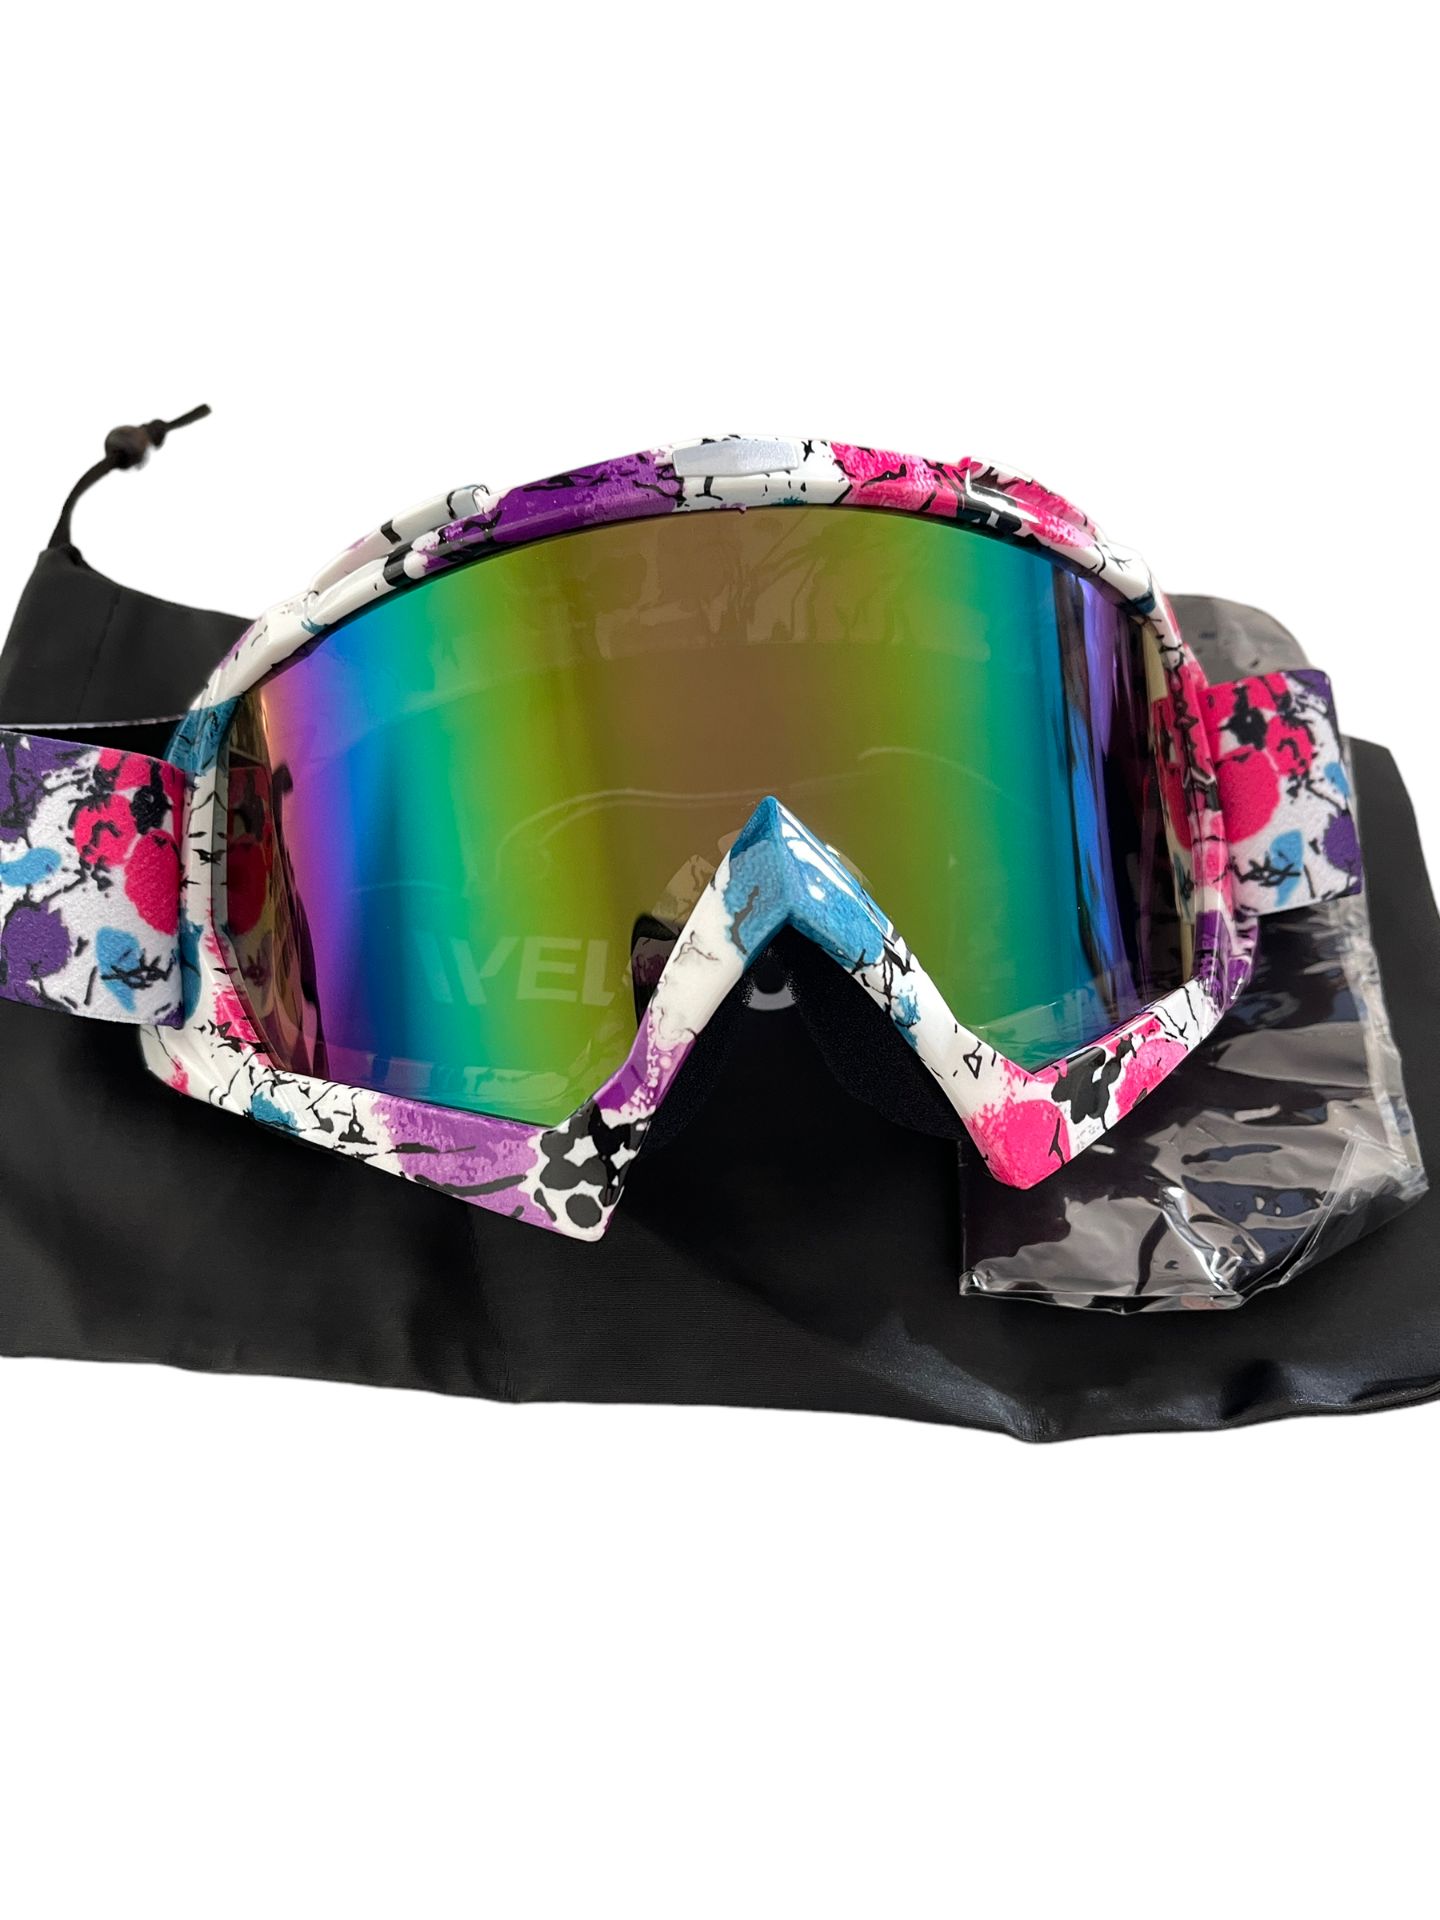 New over snow ski goggles surplus stock